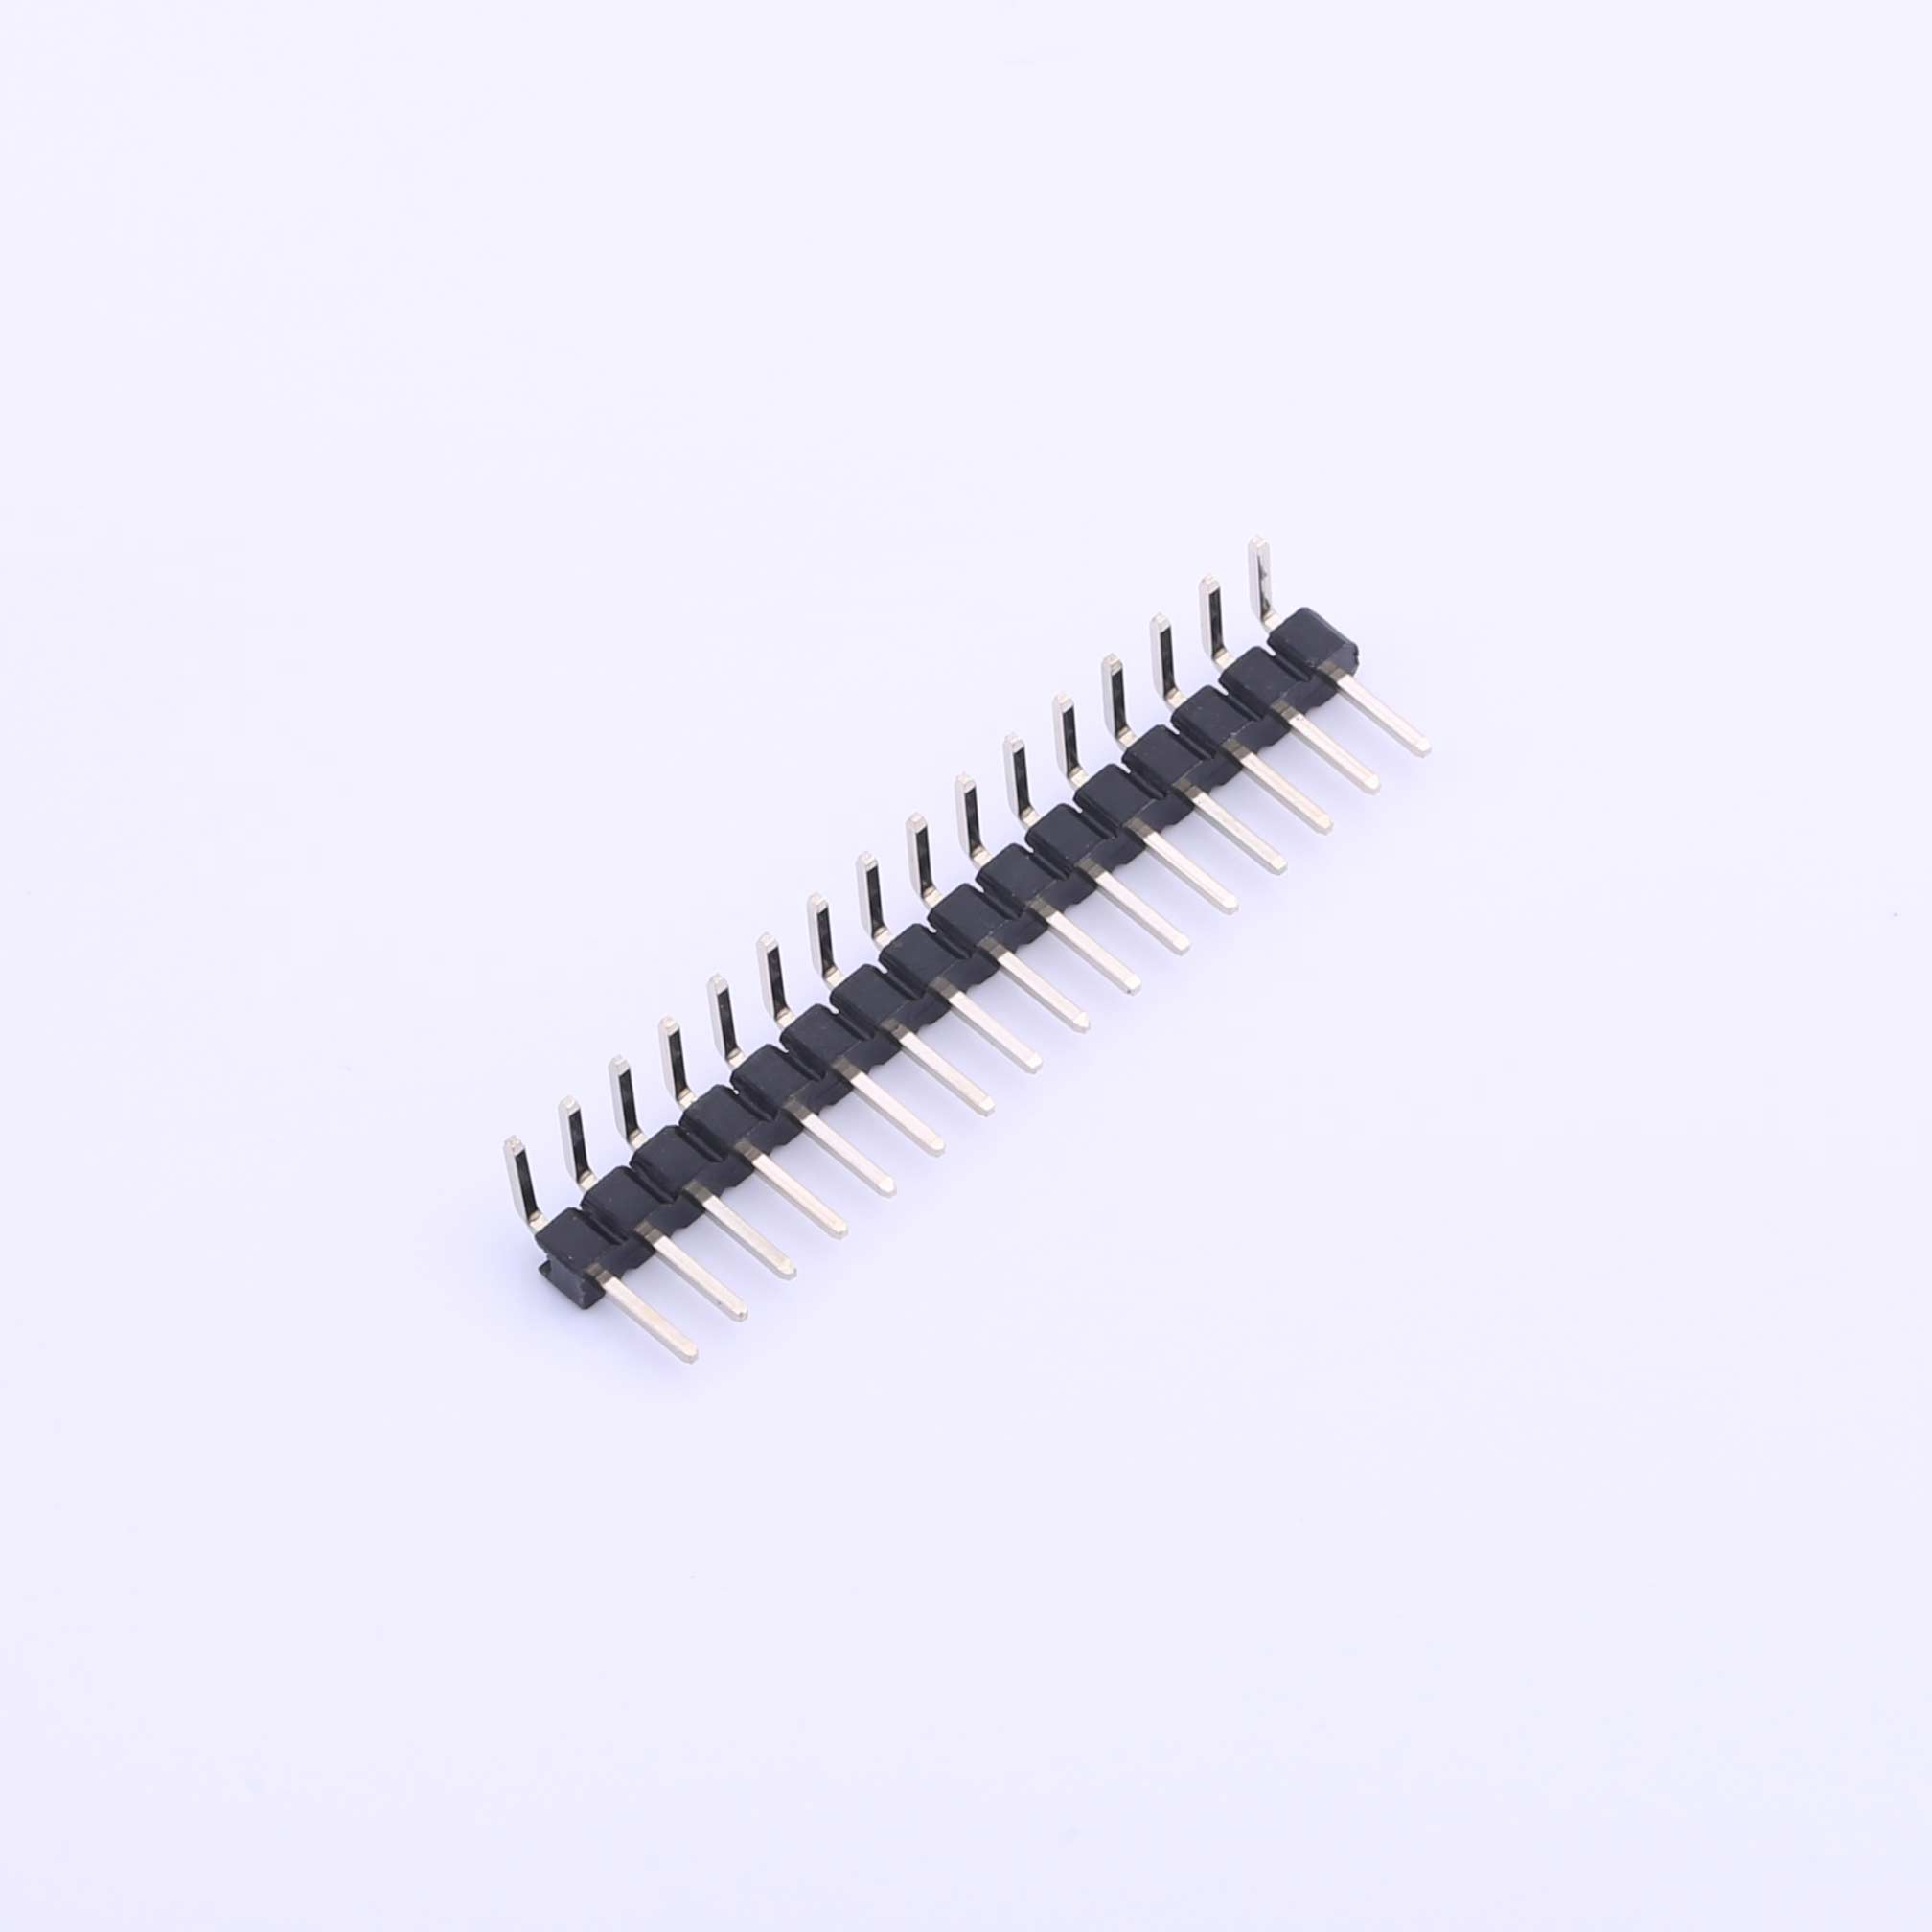 Kinghelm 2mm Pin Header Connector 16 Pin 1.5A -  KH-2PH90-1X16P-L10.5